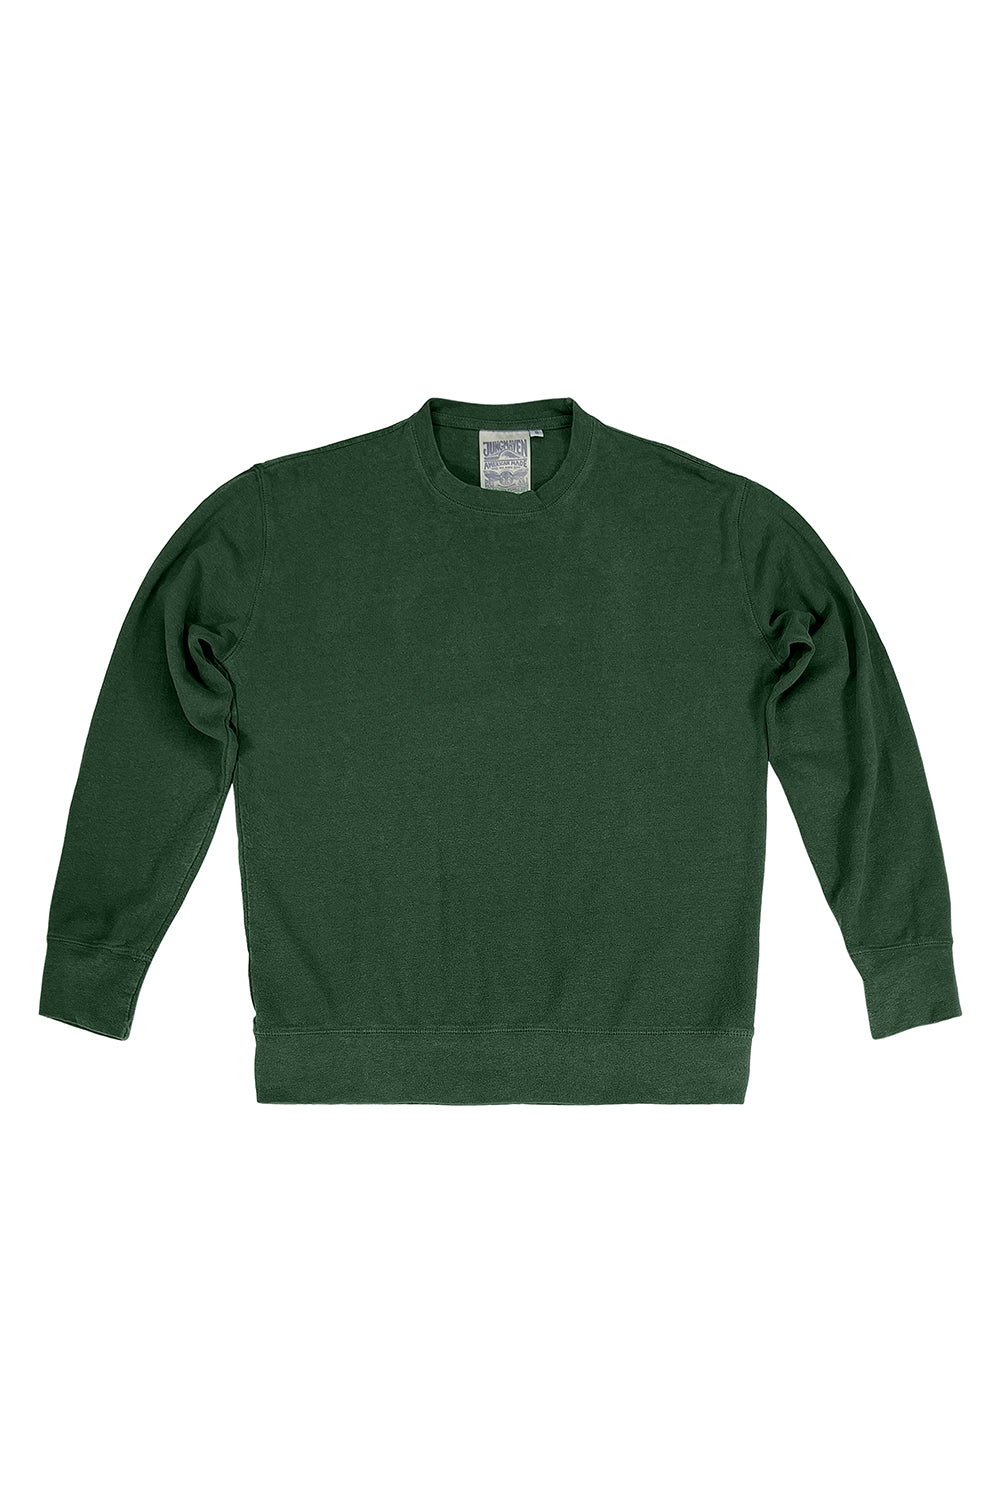 California Pullover | Jungmaven Hemp Clothing & Accessories / Color: Hunter Green